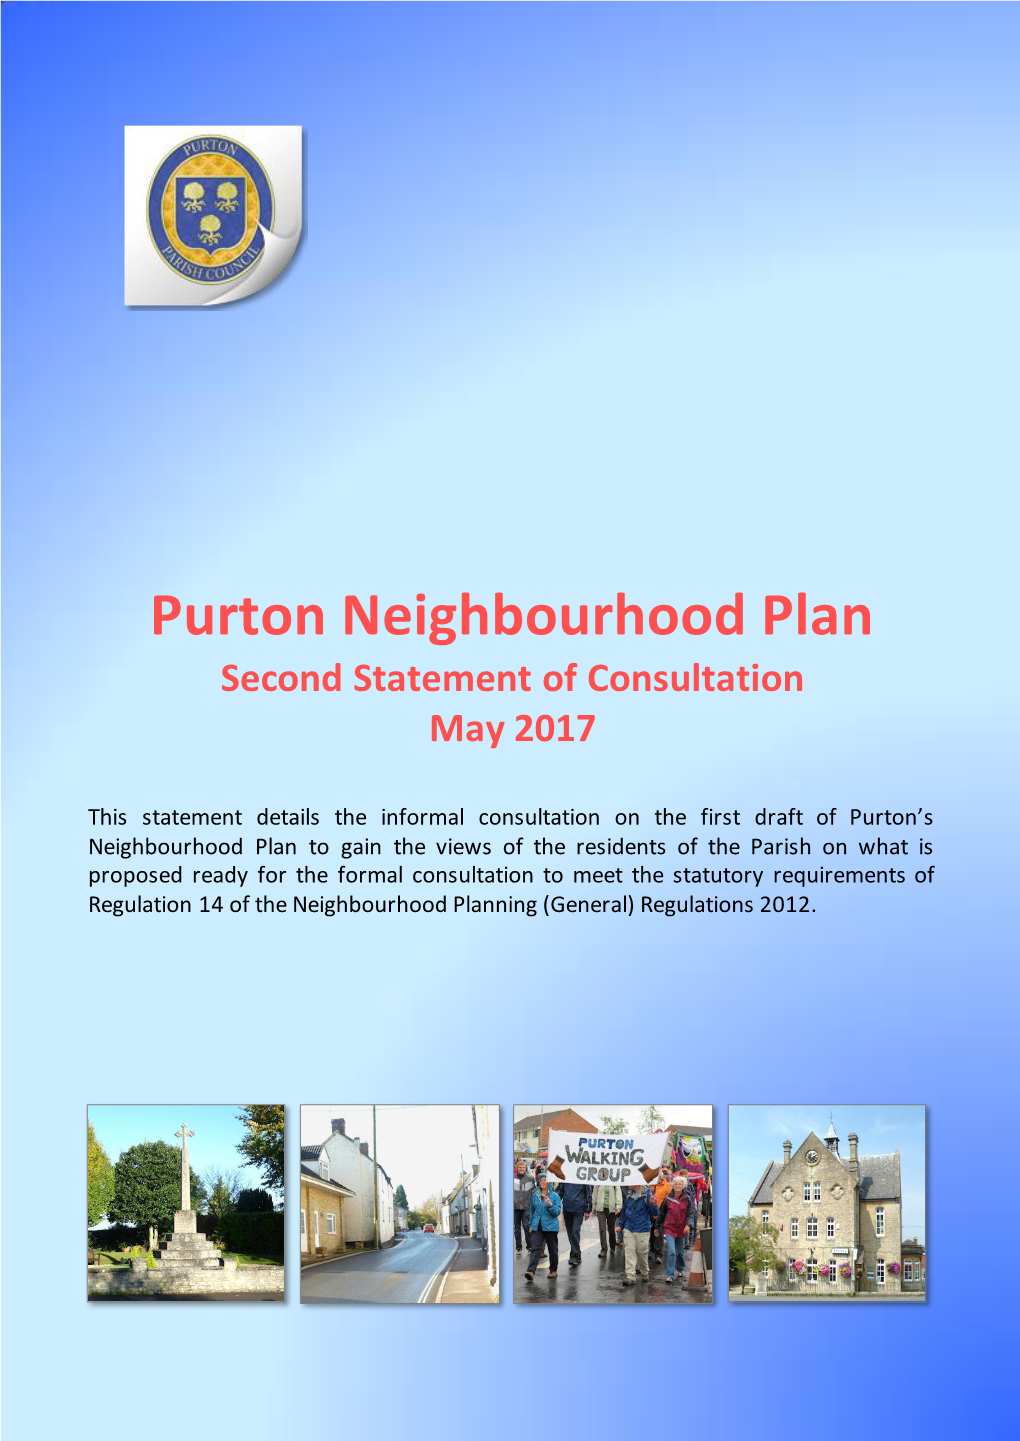 Purton Neighbourhood Plan Second Statement of Consultation May 2017